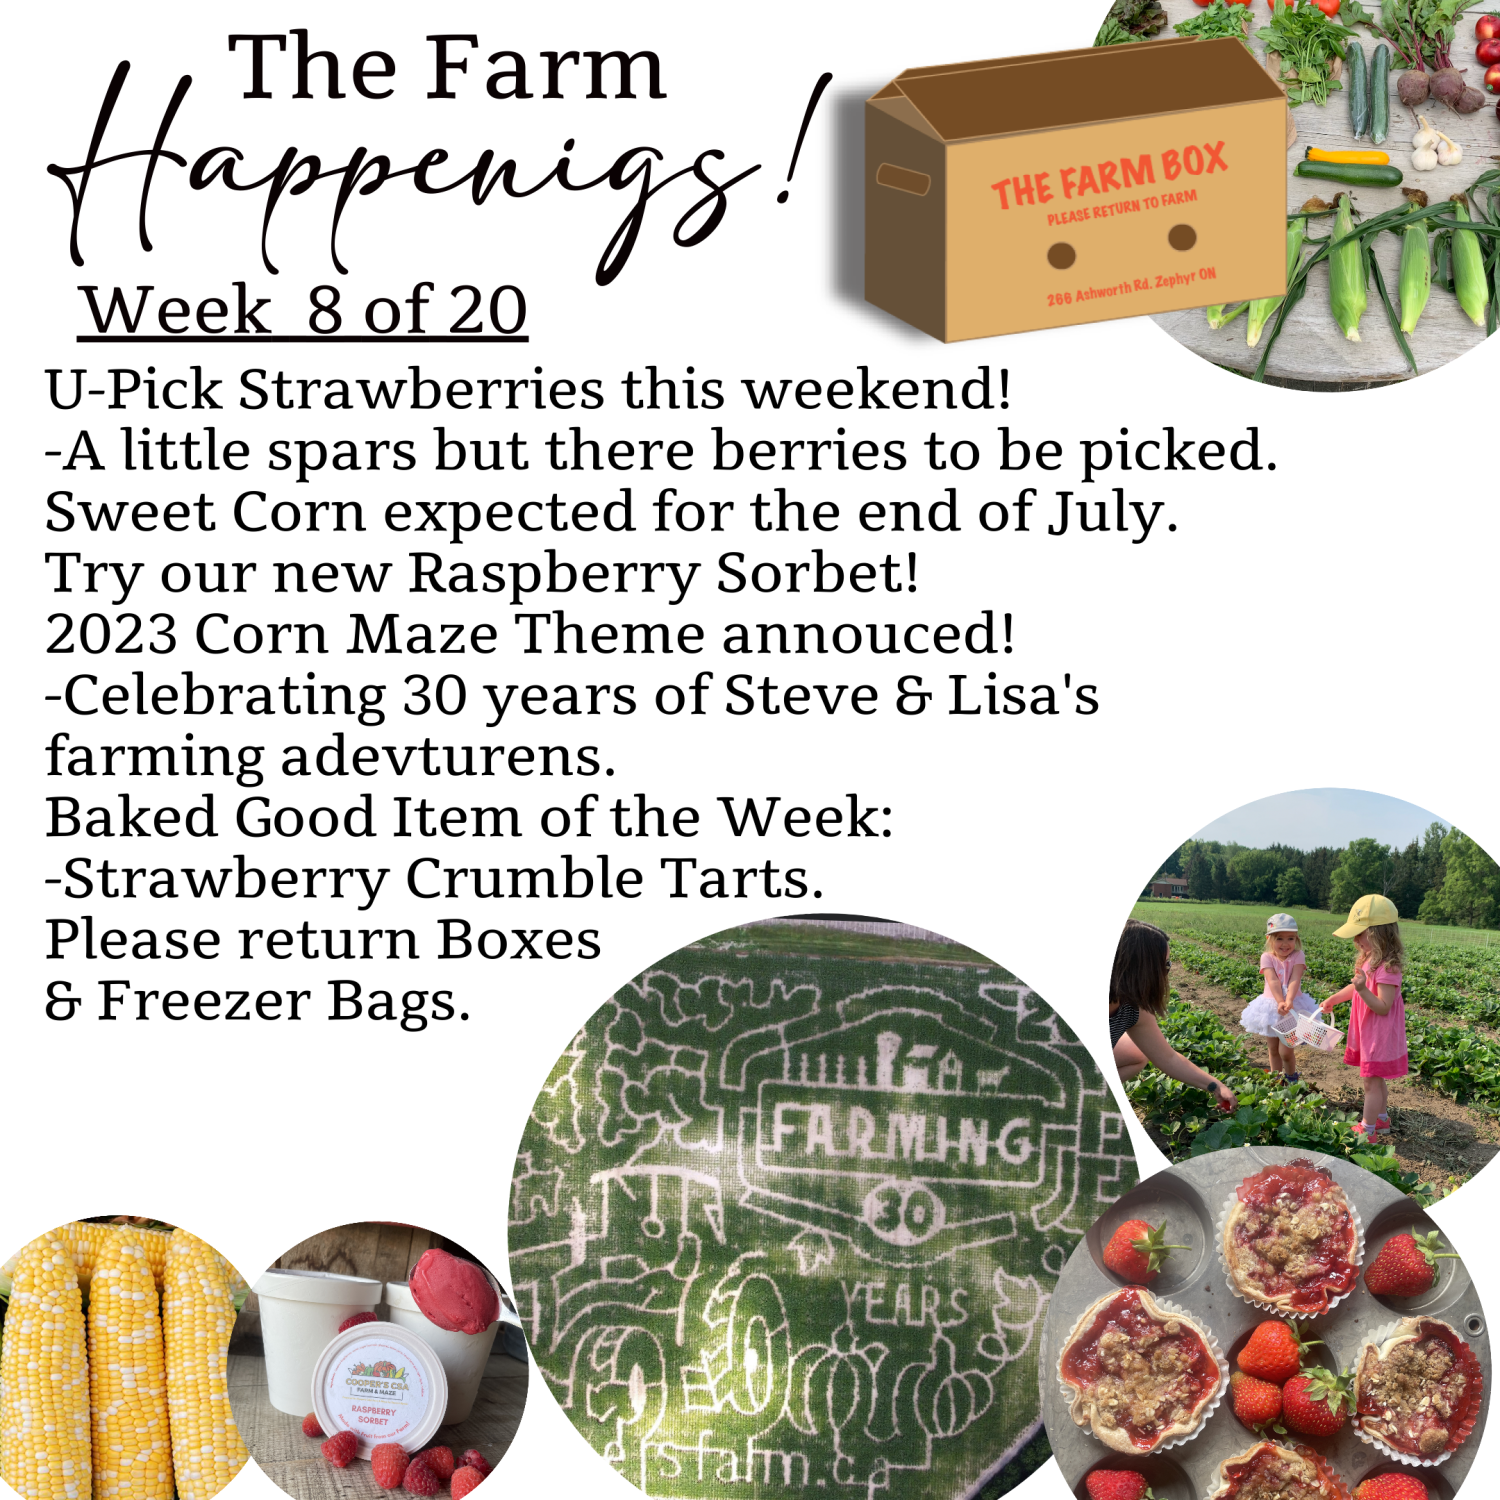 "The Farm Box"-Coopers CSA Farm Farm Happenings Week 8